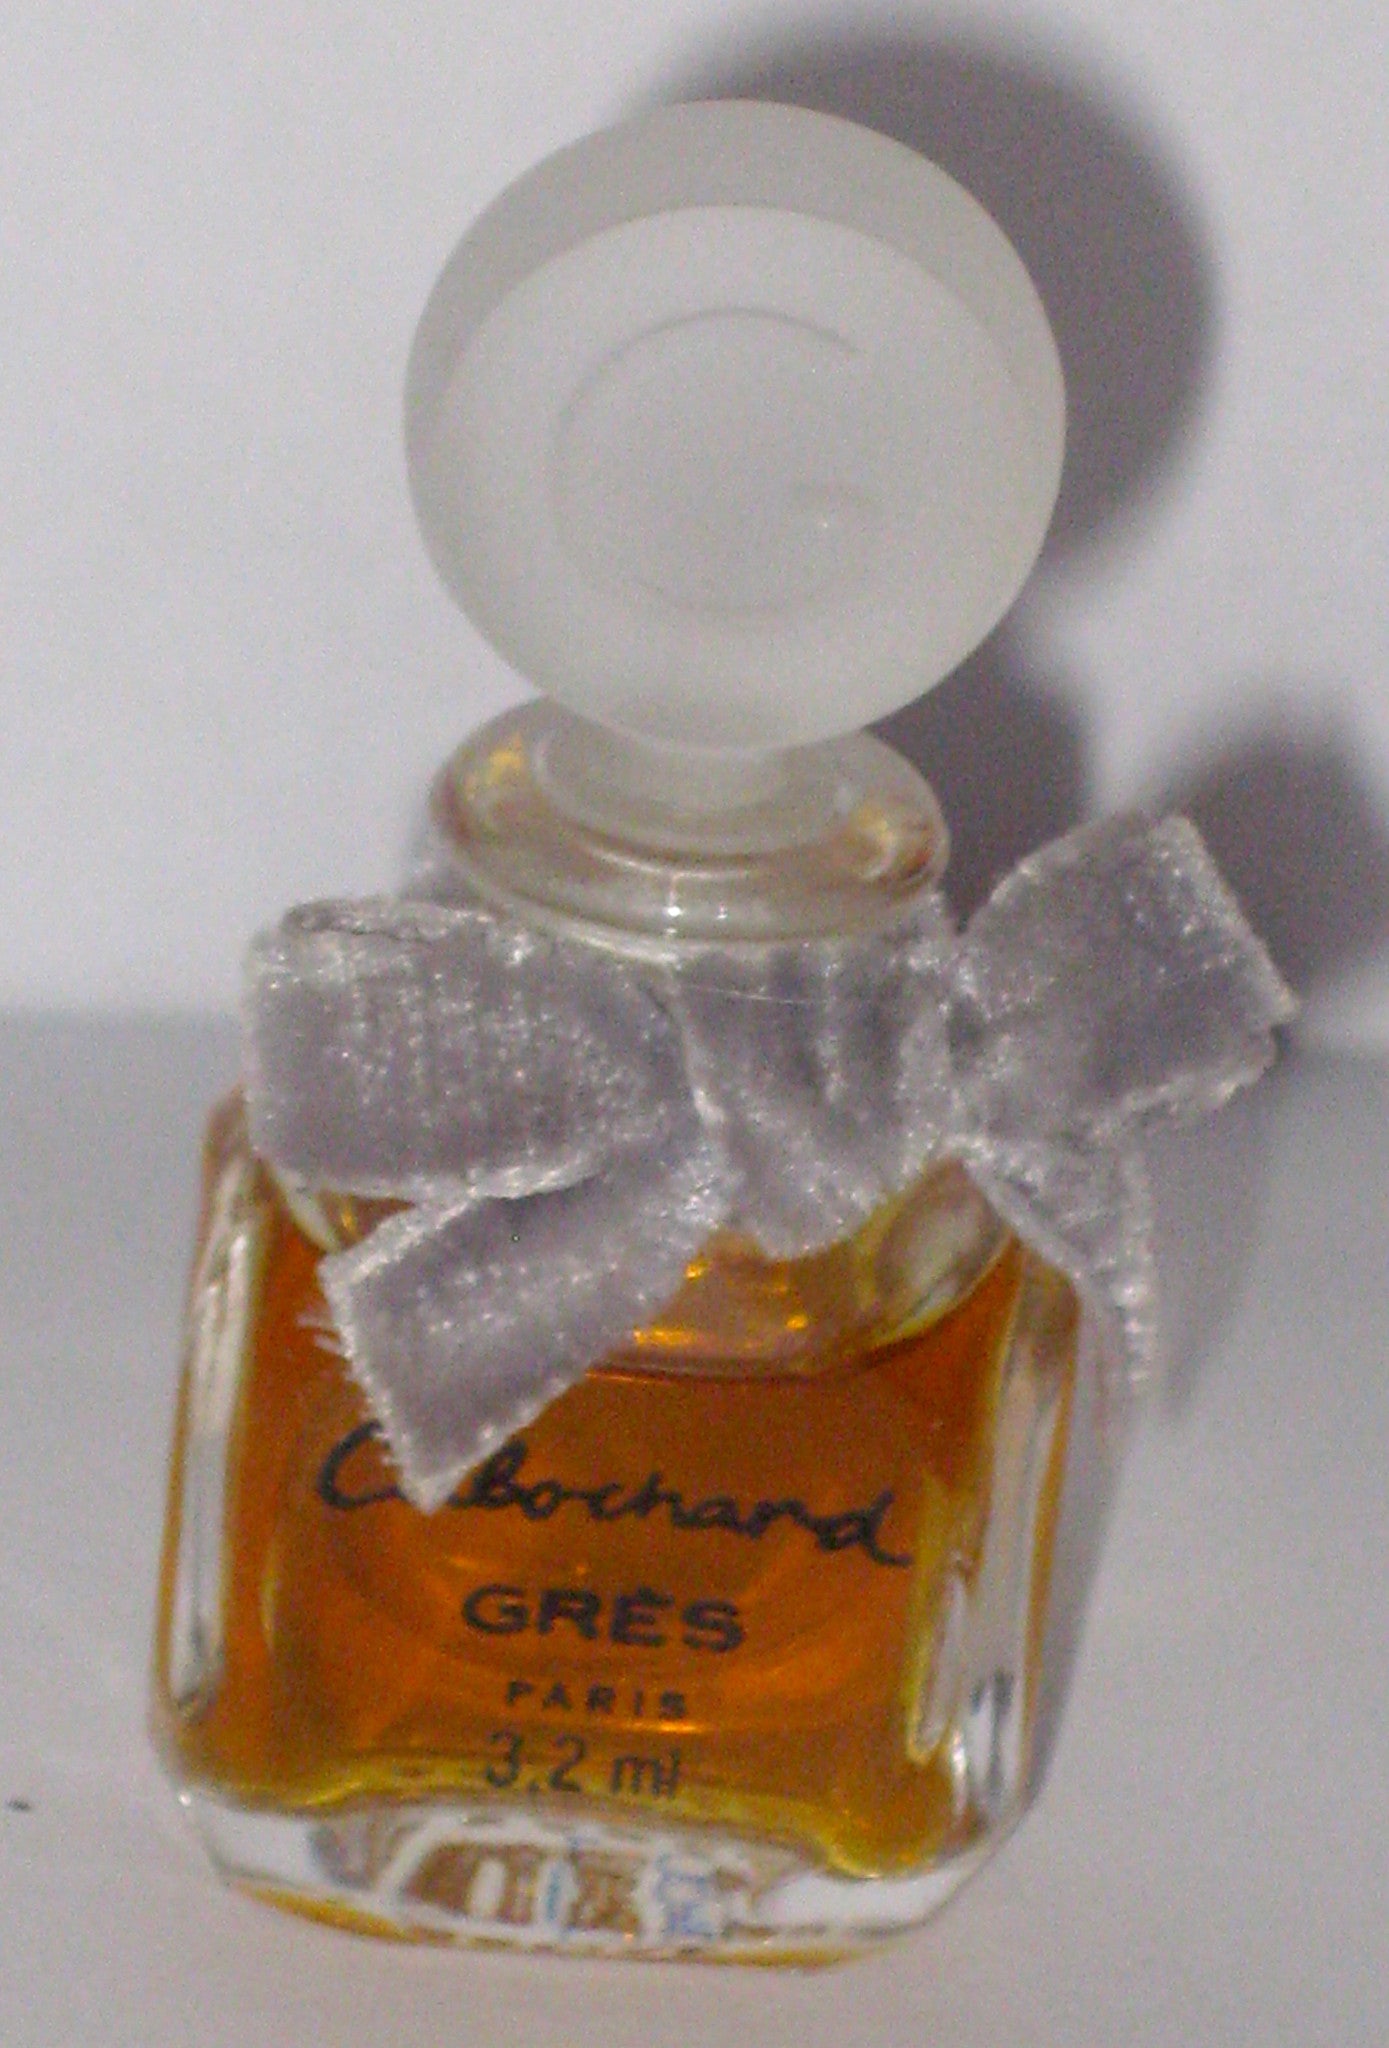 Cabochard Gres Perfume Mini